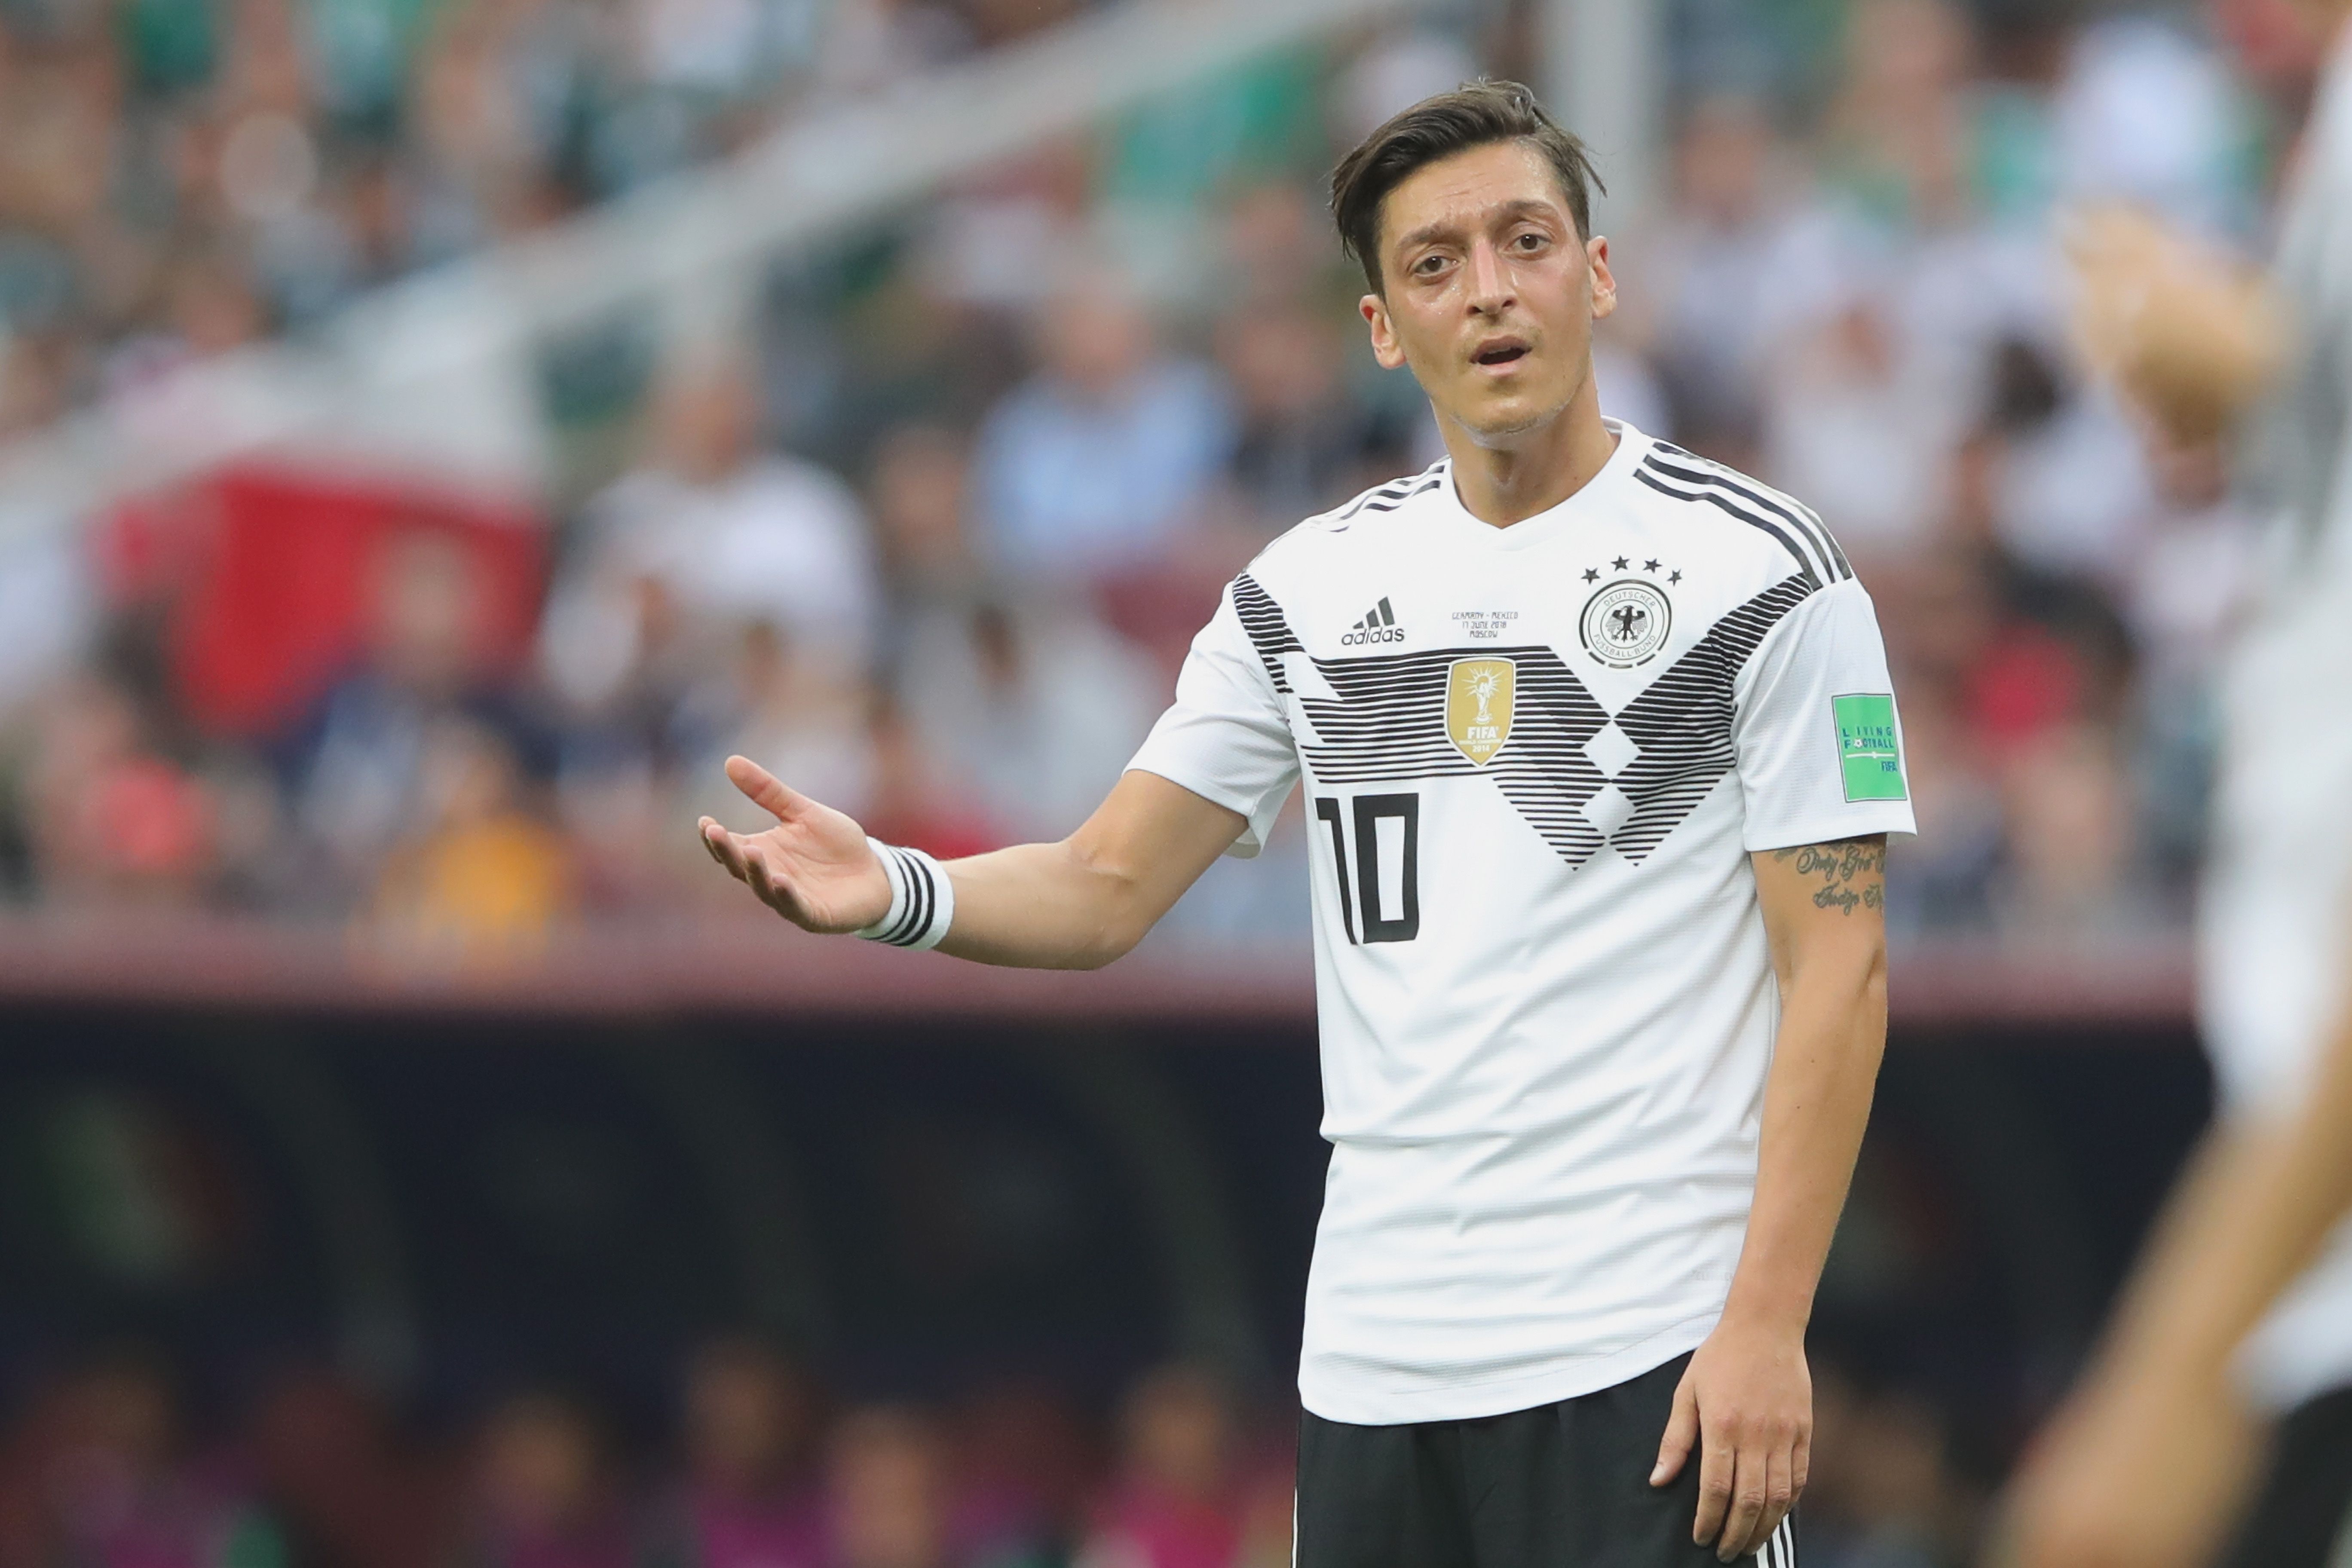 Mesut Ozil ended his Germany career in 2018